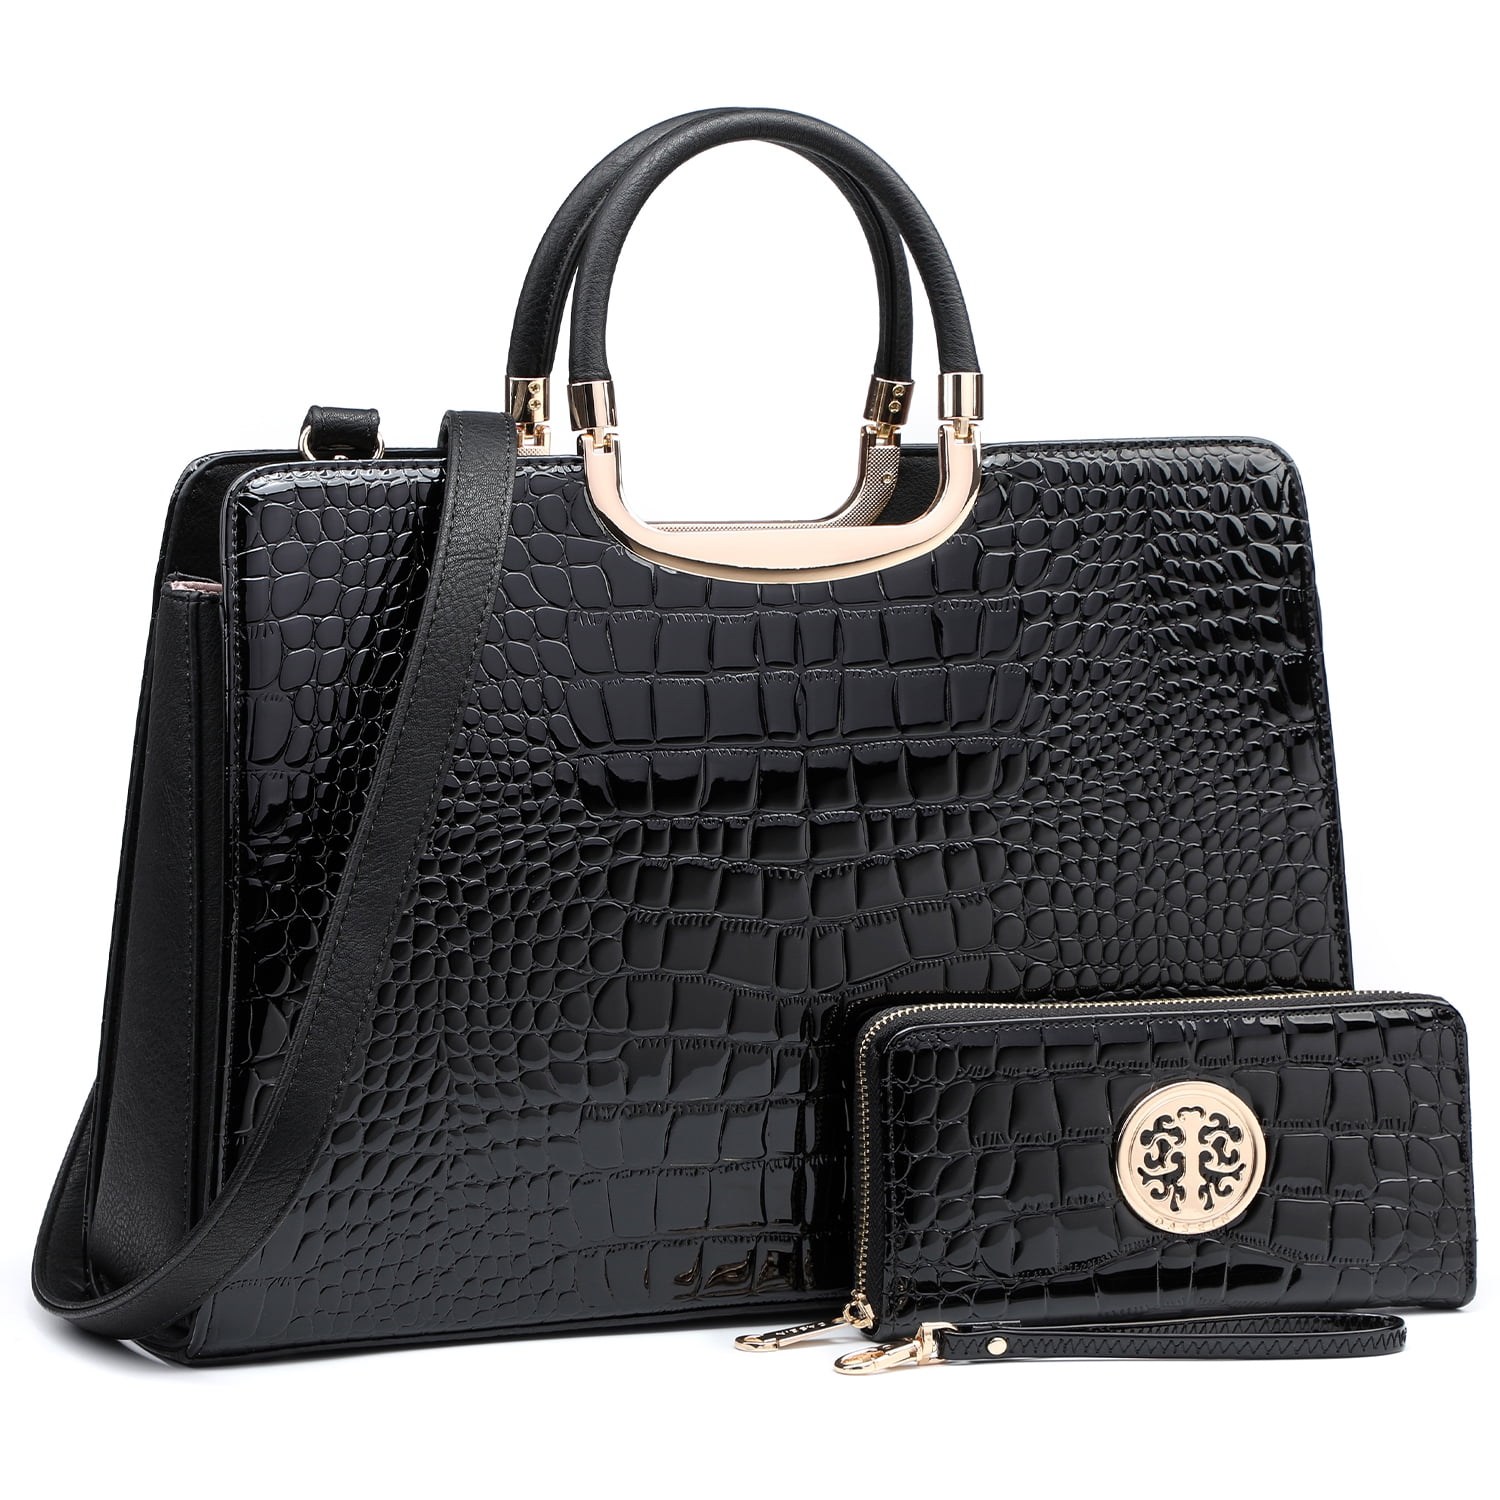 Womens Handbag Top Handle Shoulder Bag Tote Satchel Purse Work Bag with Matching Wallet 